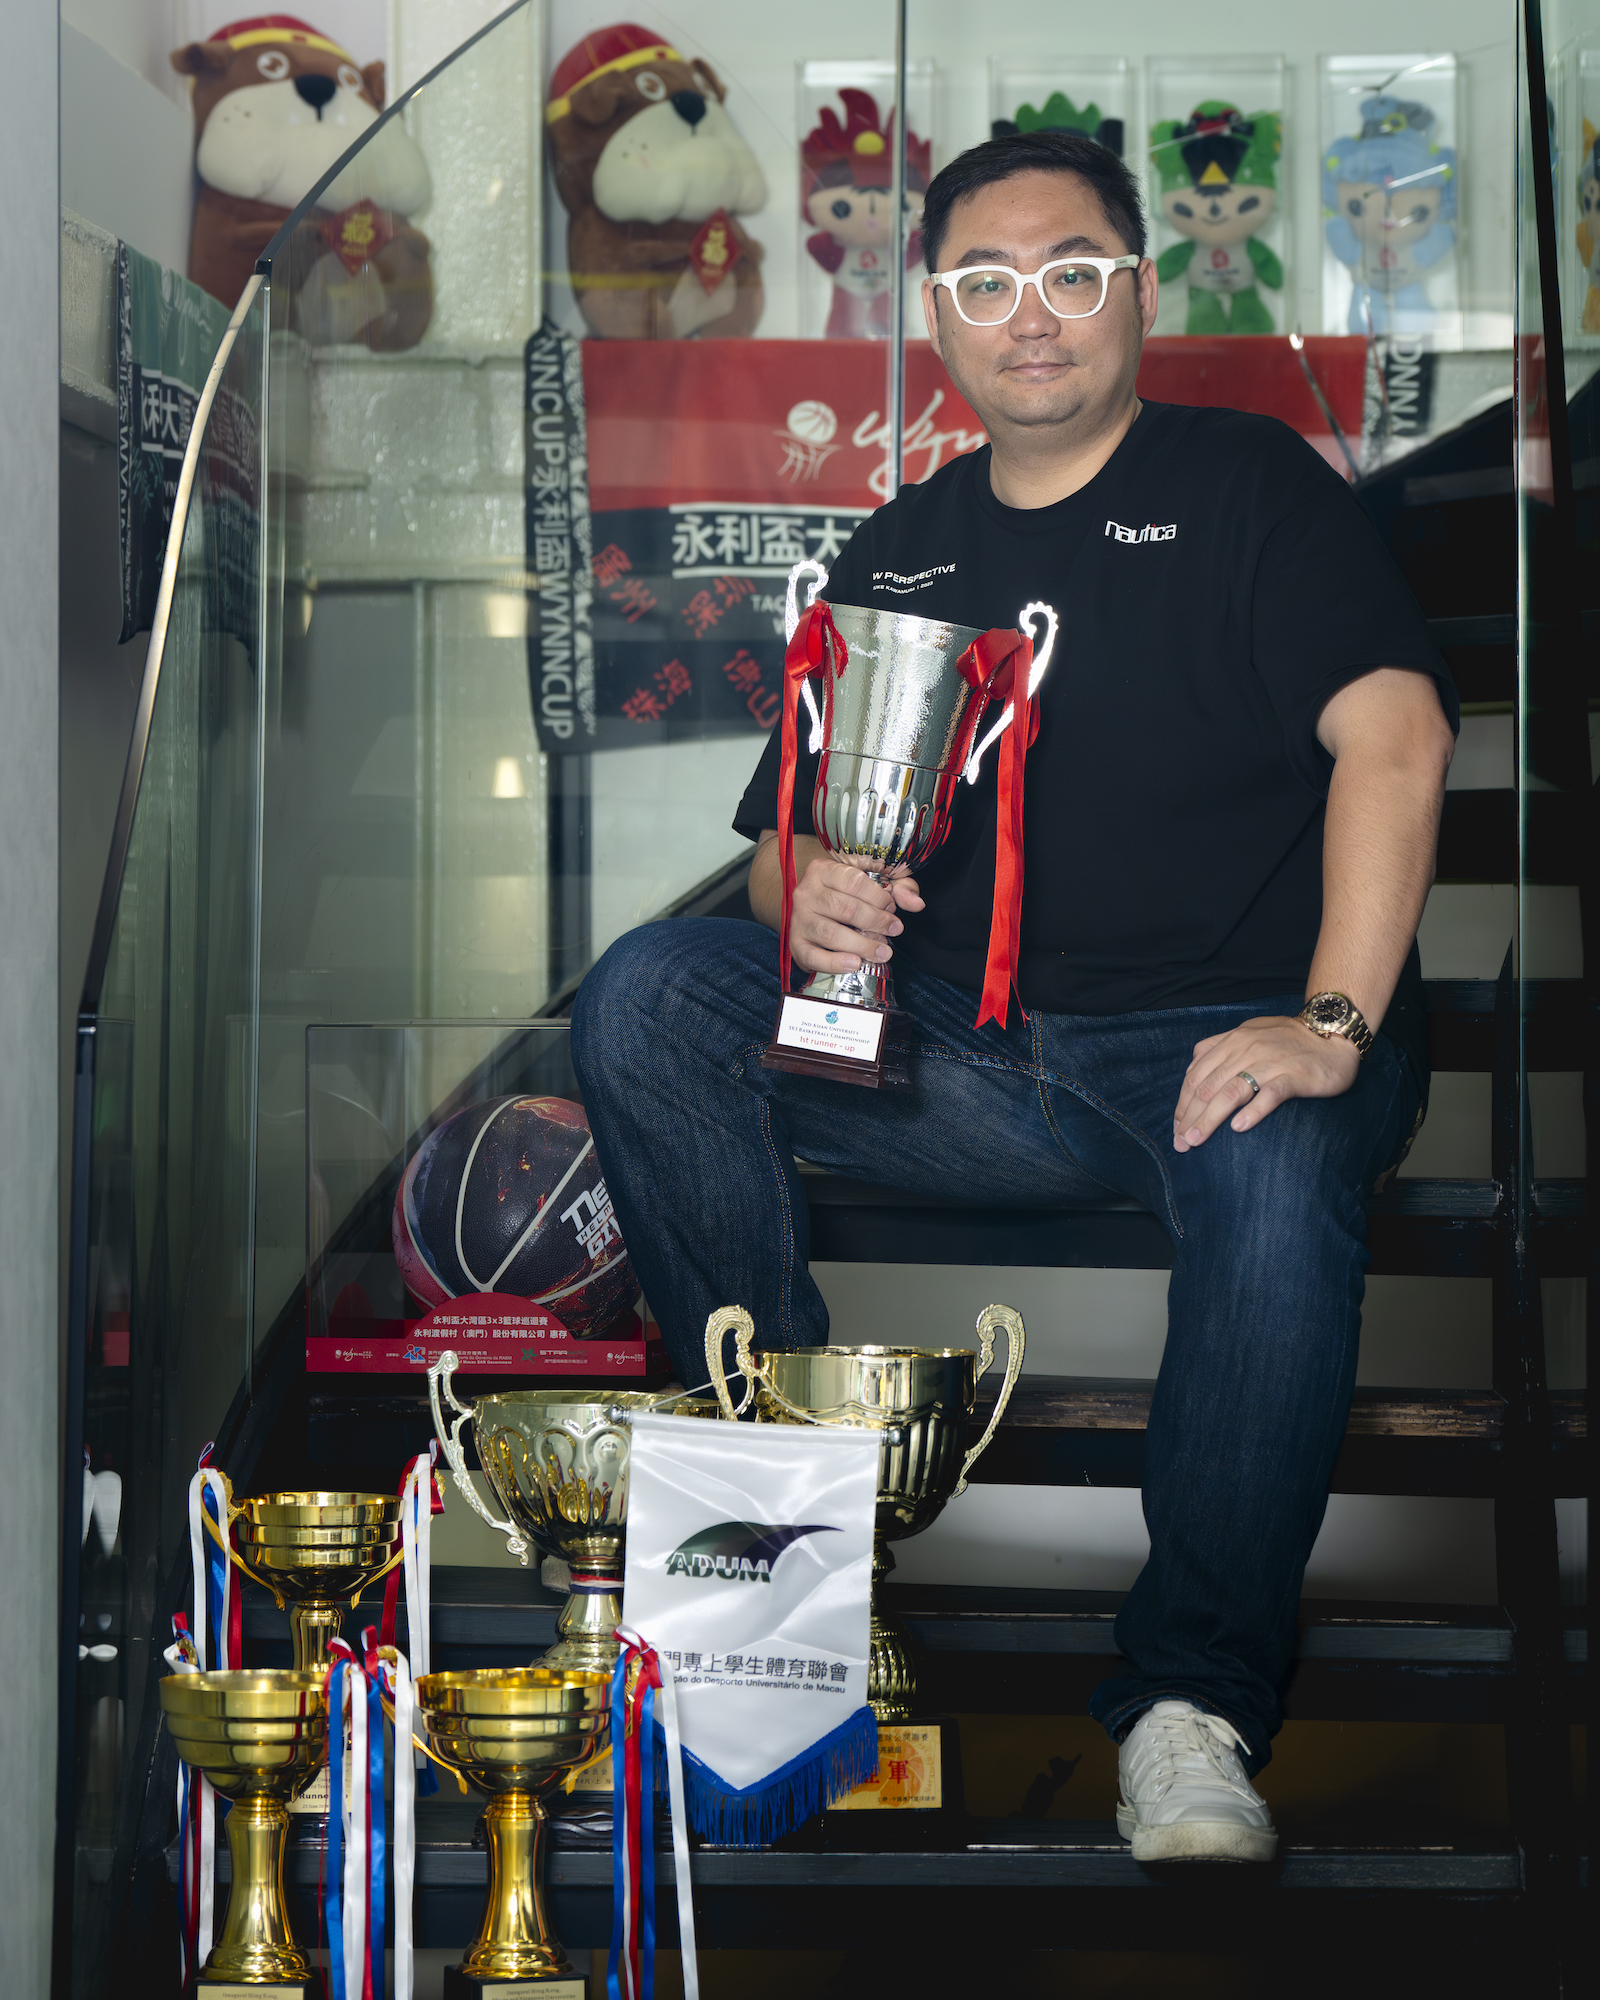 Ryo Lou is the Macau Universitarian Sports Association’s president